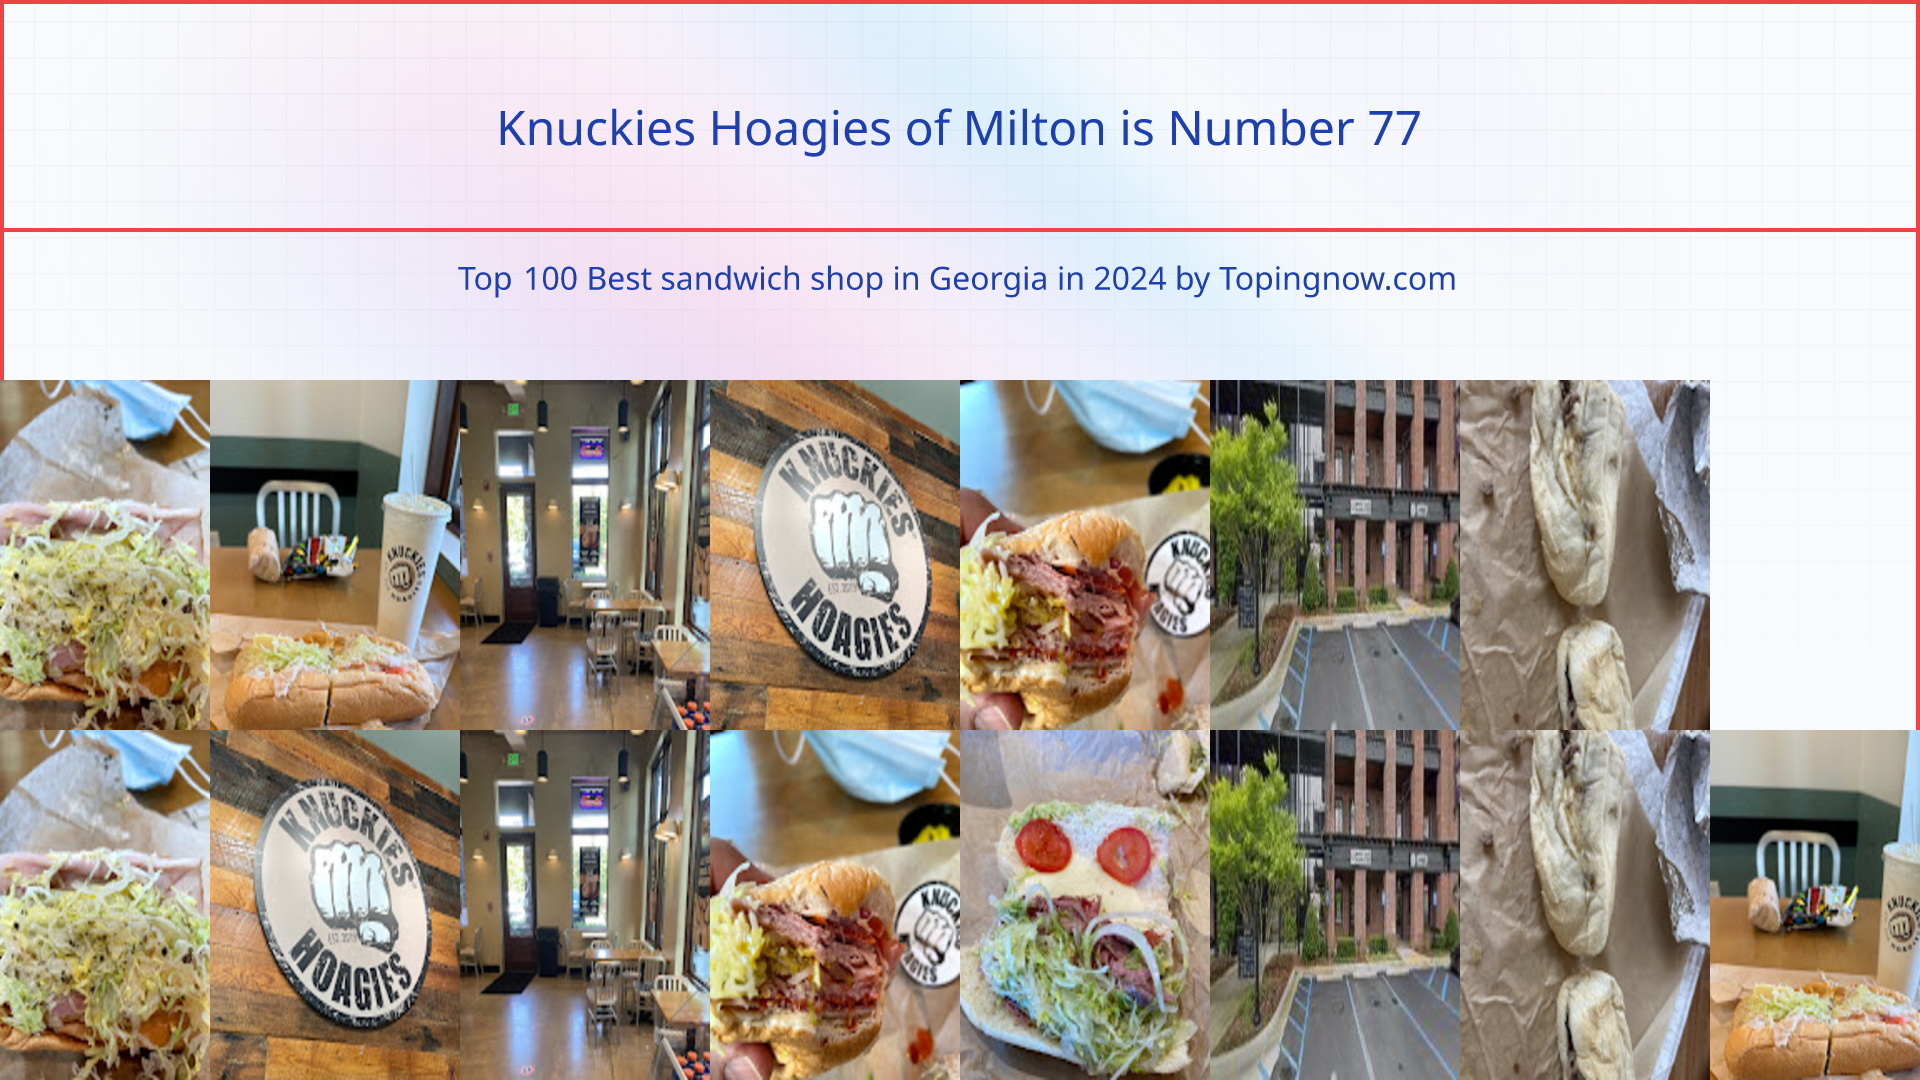 Knuckies Hoagies of Milton: Top 100 Best sandwich shop in Georgia in 2024